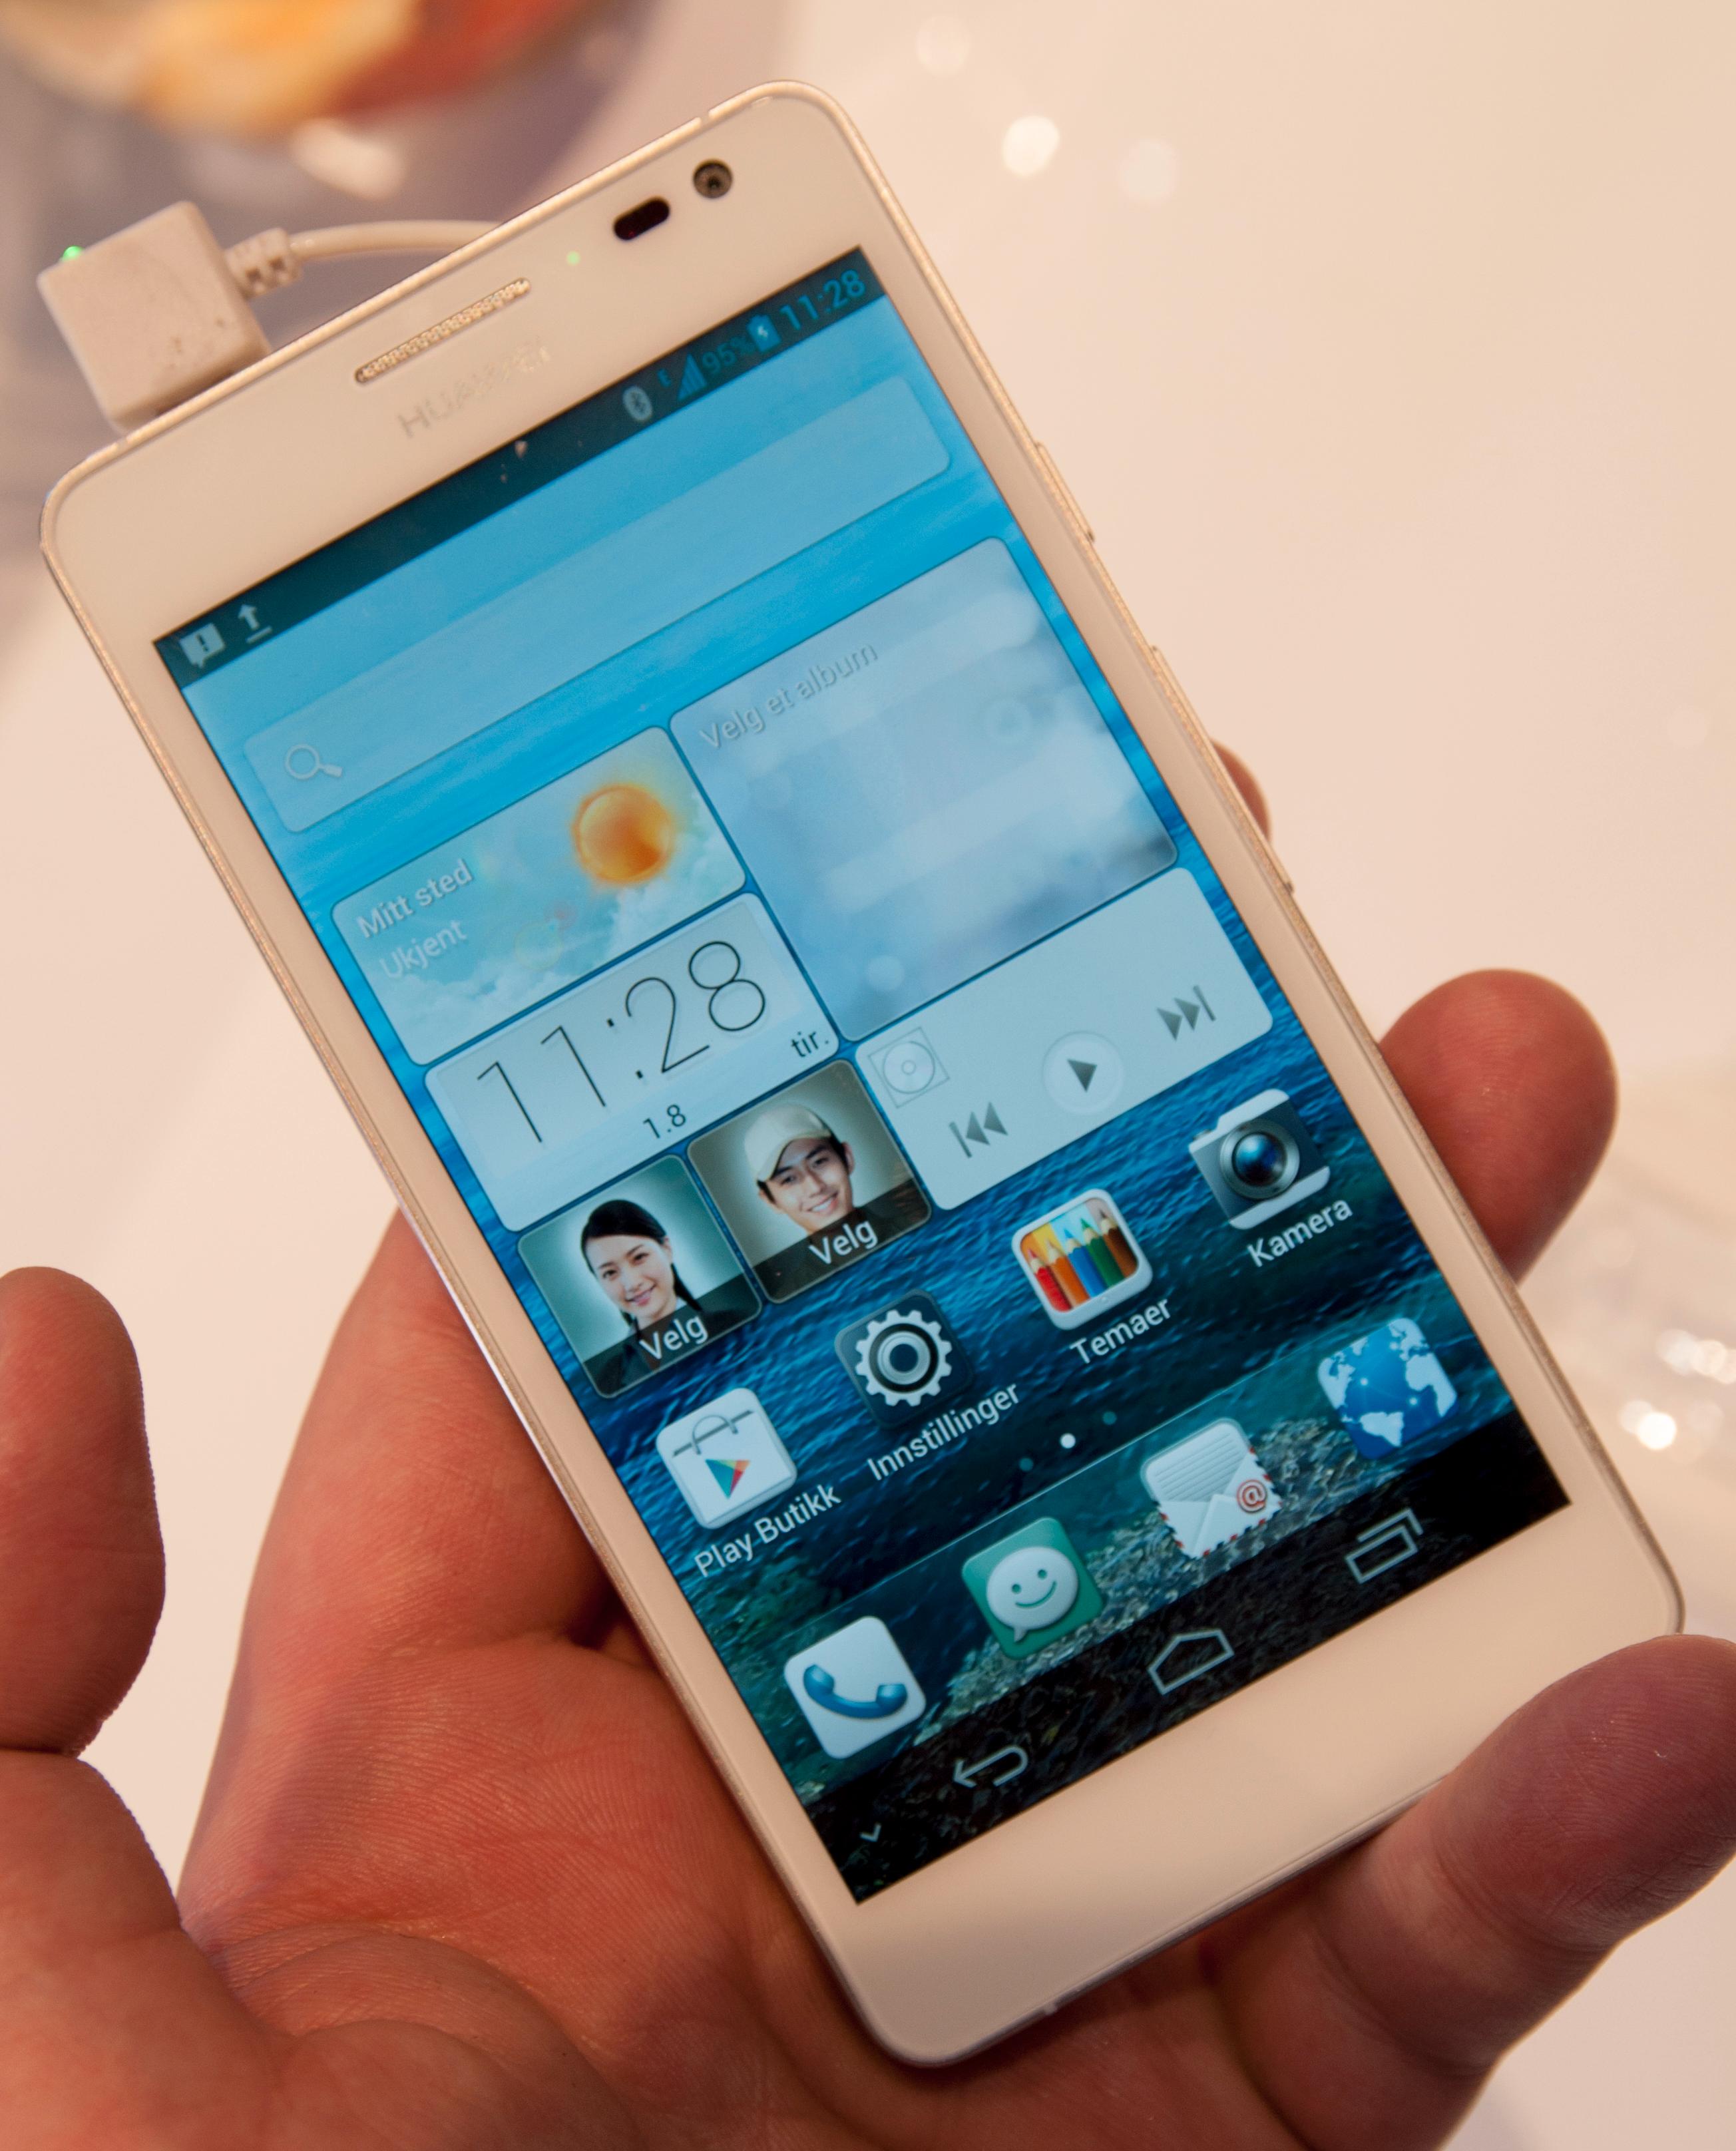 Huawei kaller de nye menyene sine for Emotion UI.Foto: Finn Jarle Kvalheim, Amobil.no